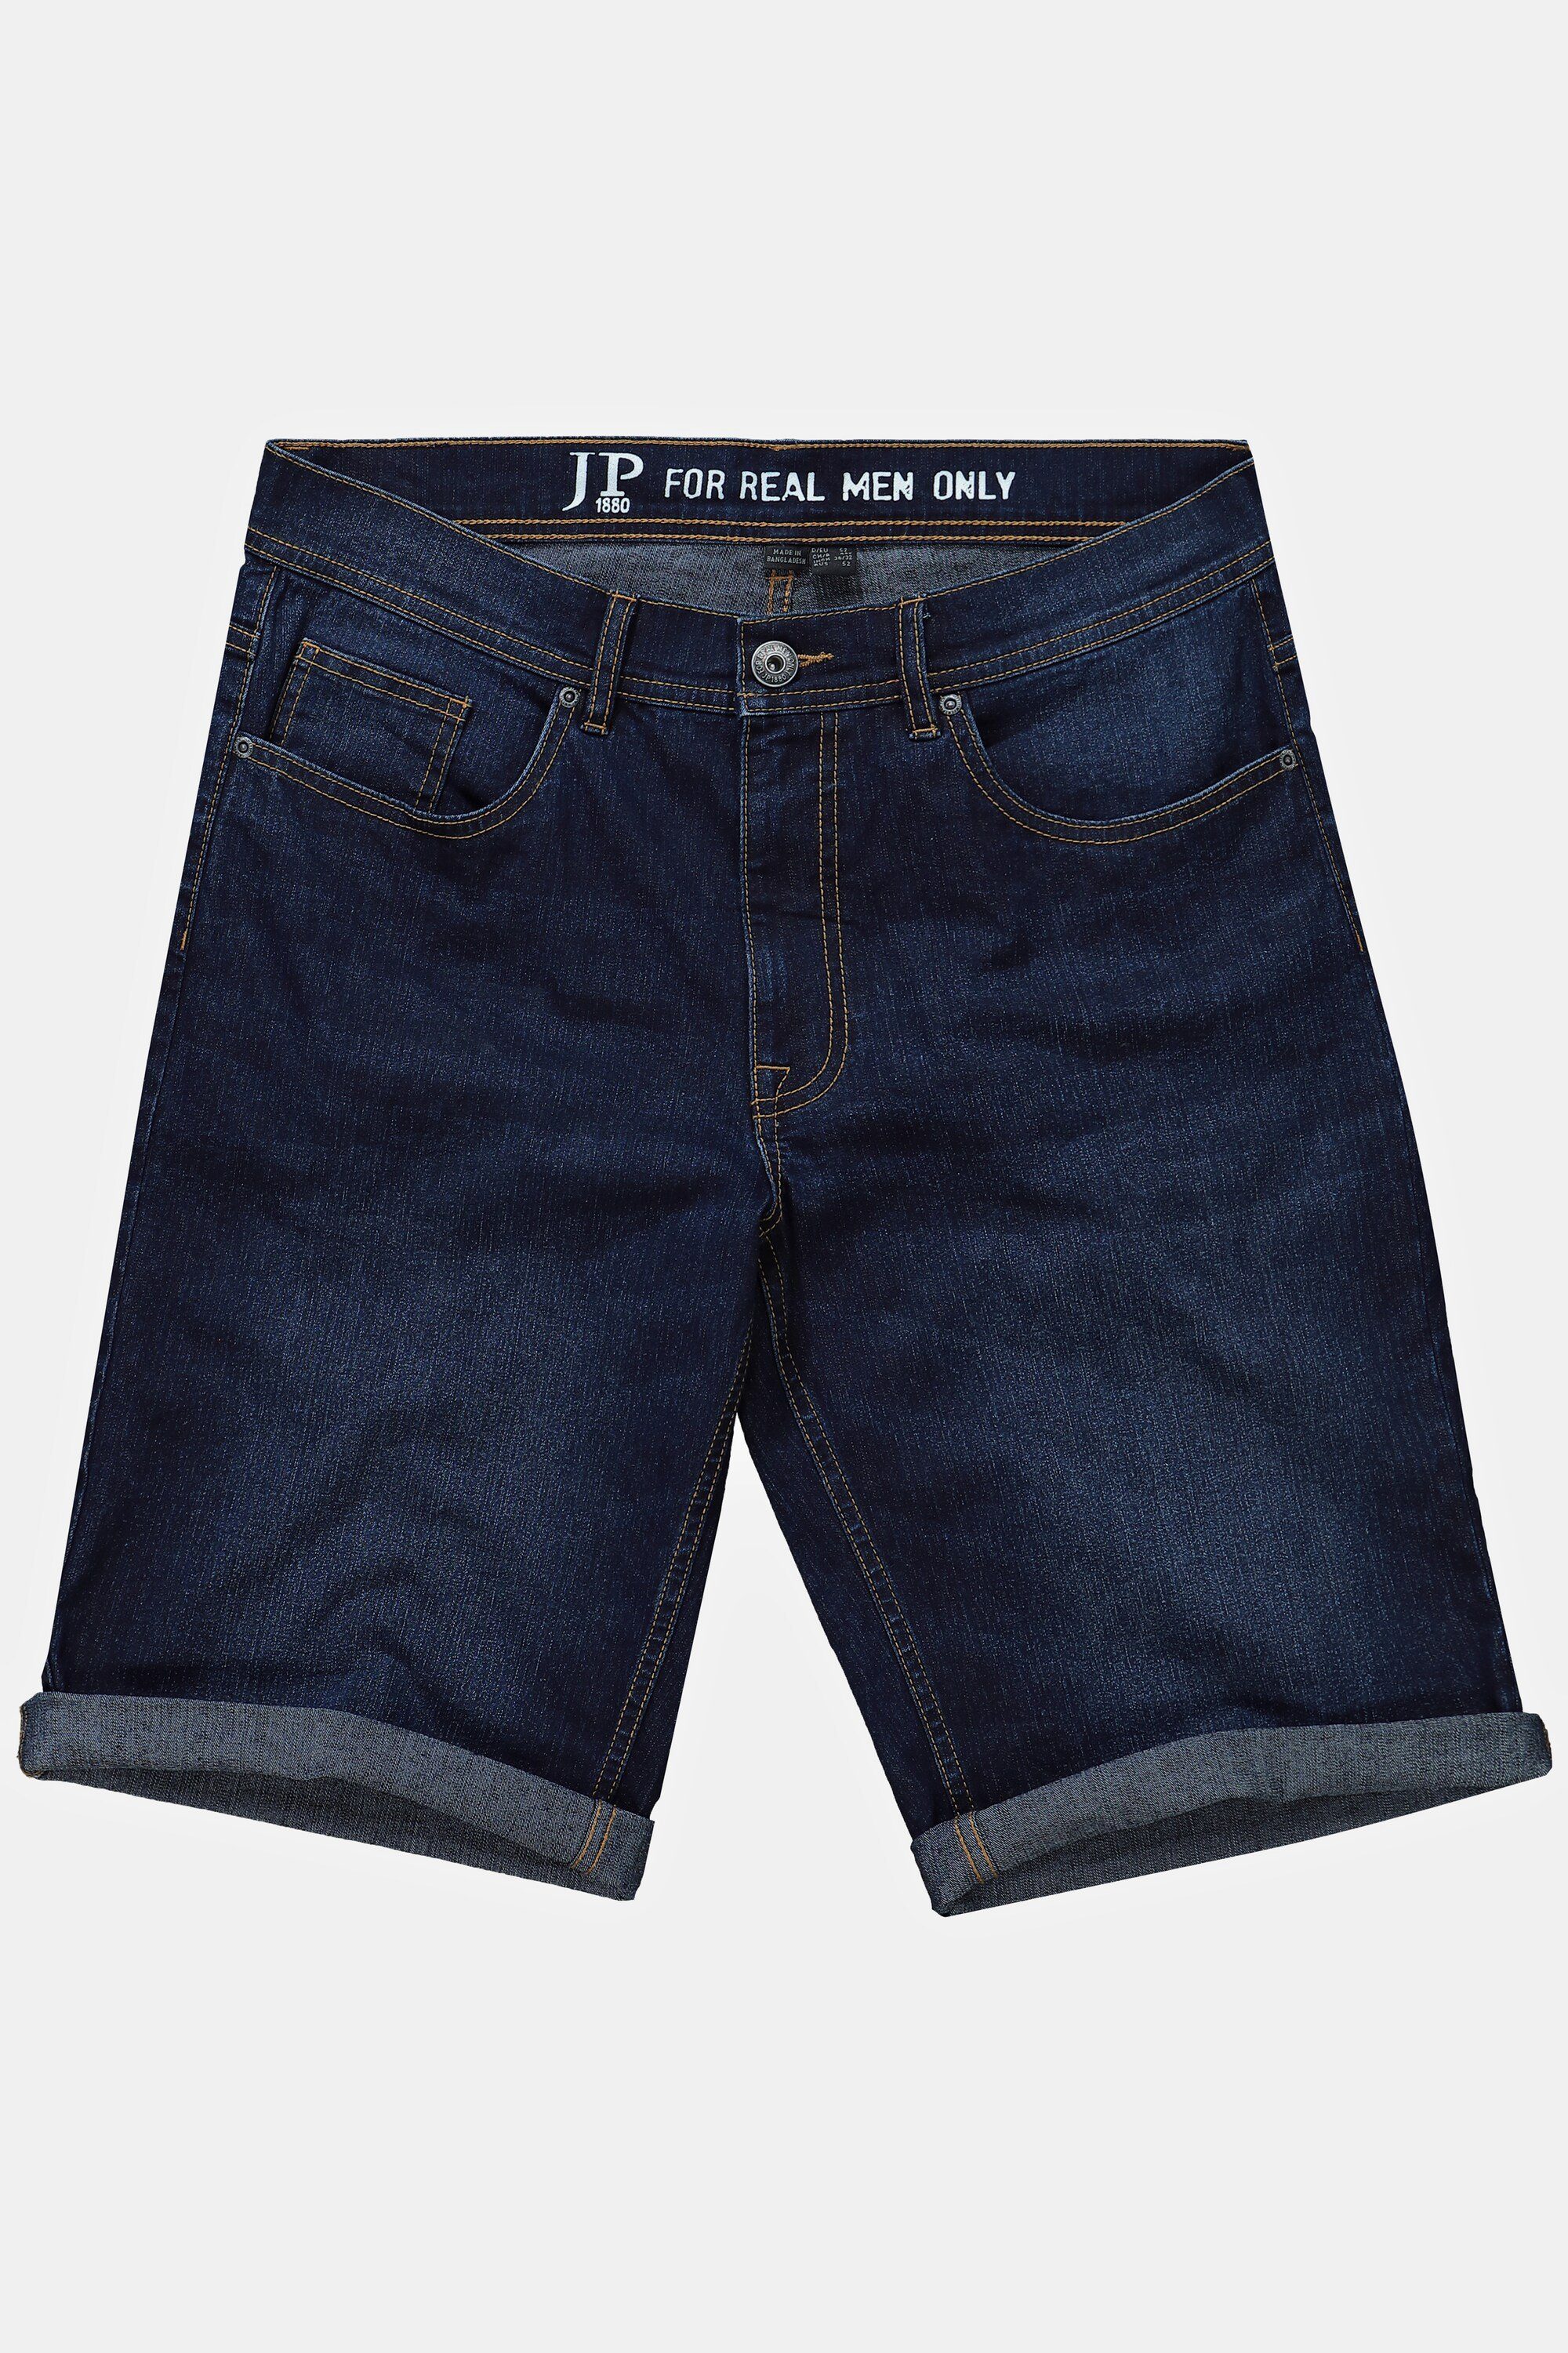 Jeansbermudas Denim Fit JP1880 5-Pocket Regular dark Stretch denim blue Bermuda